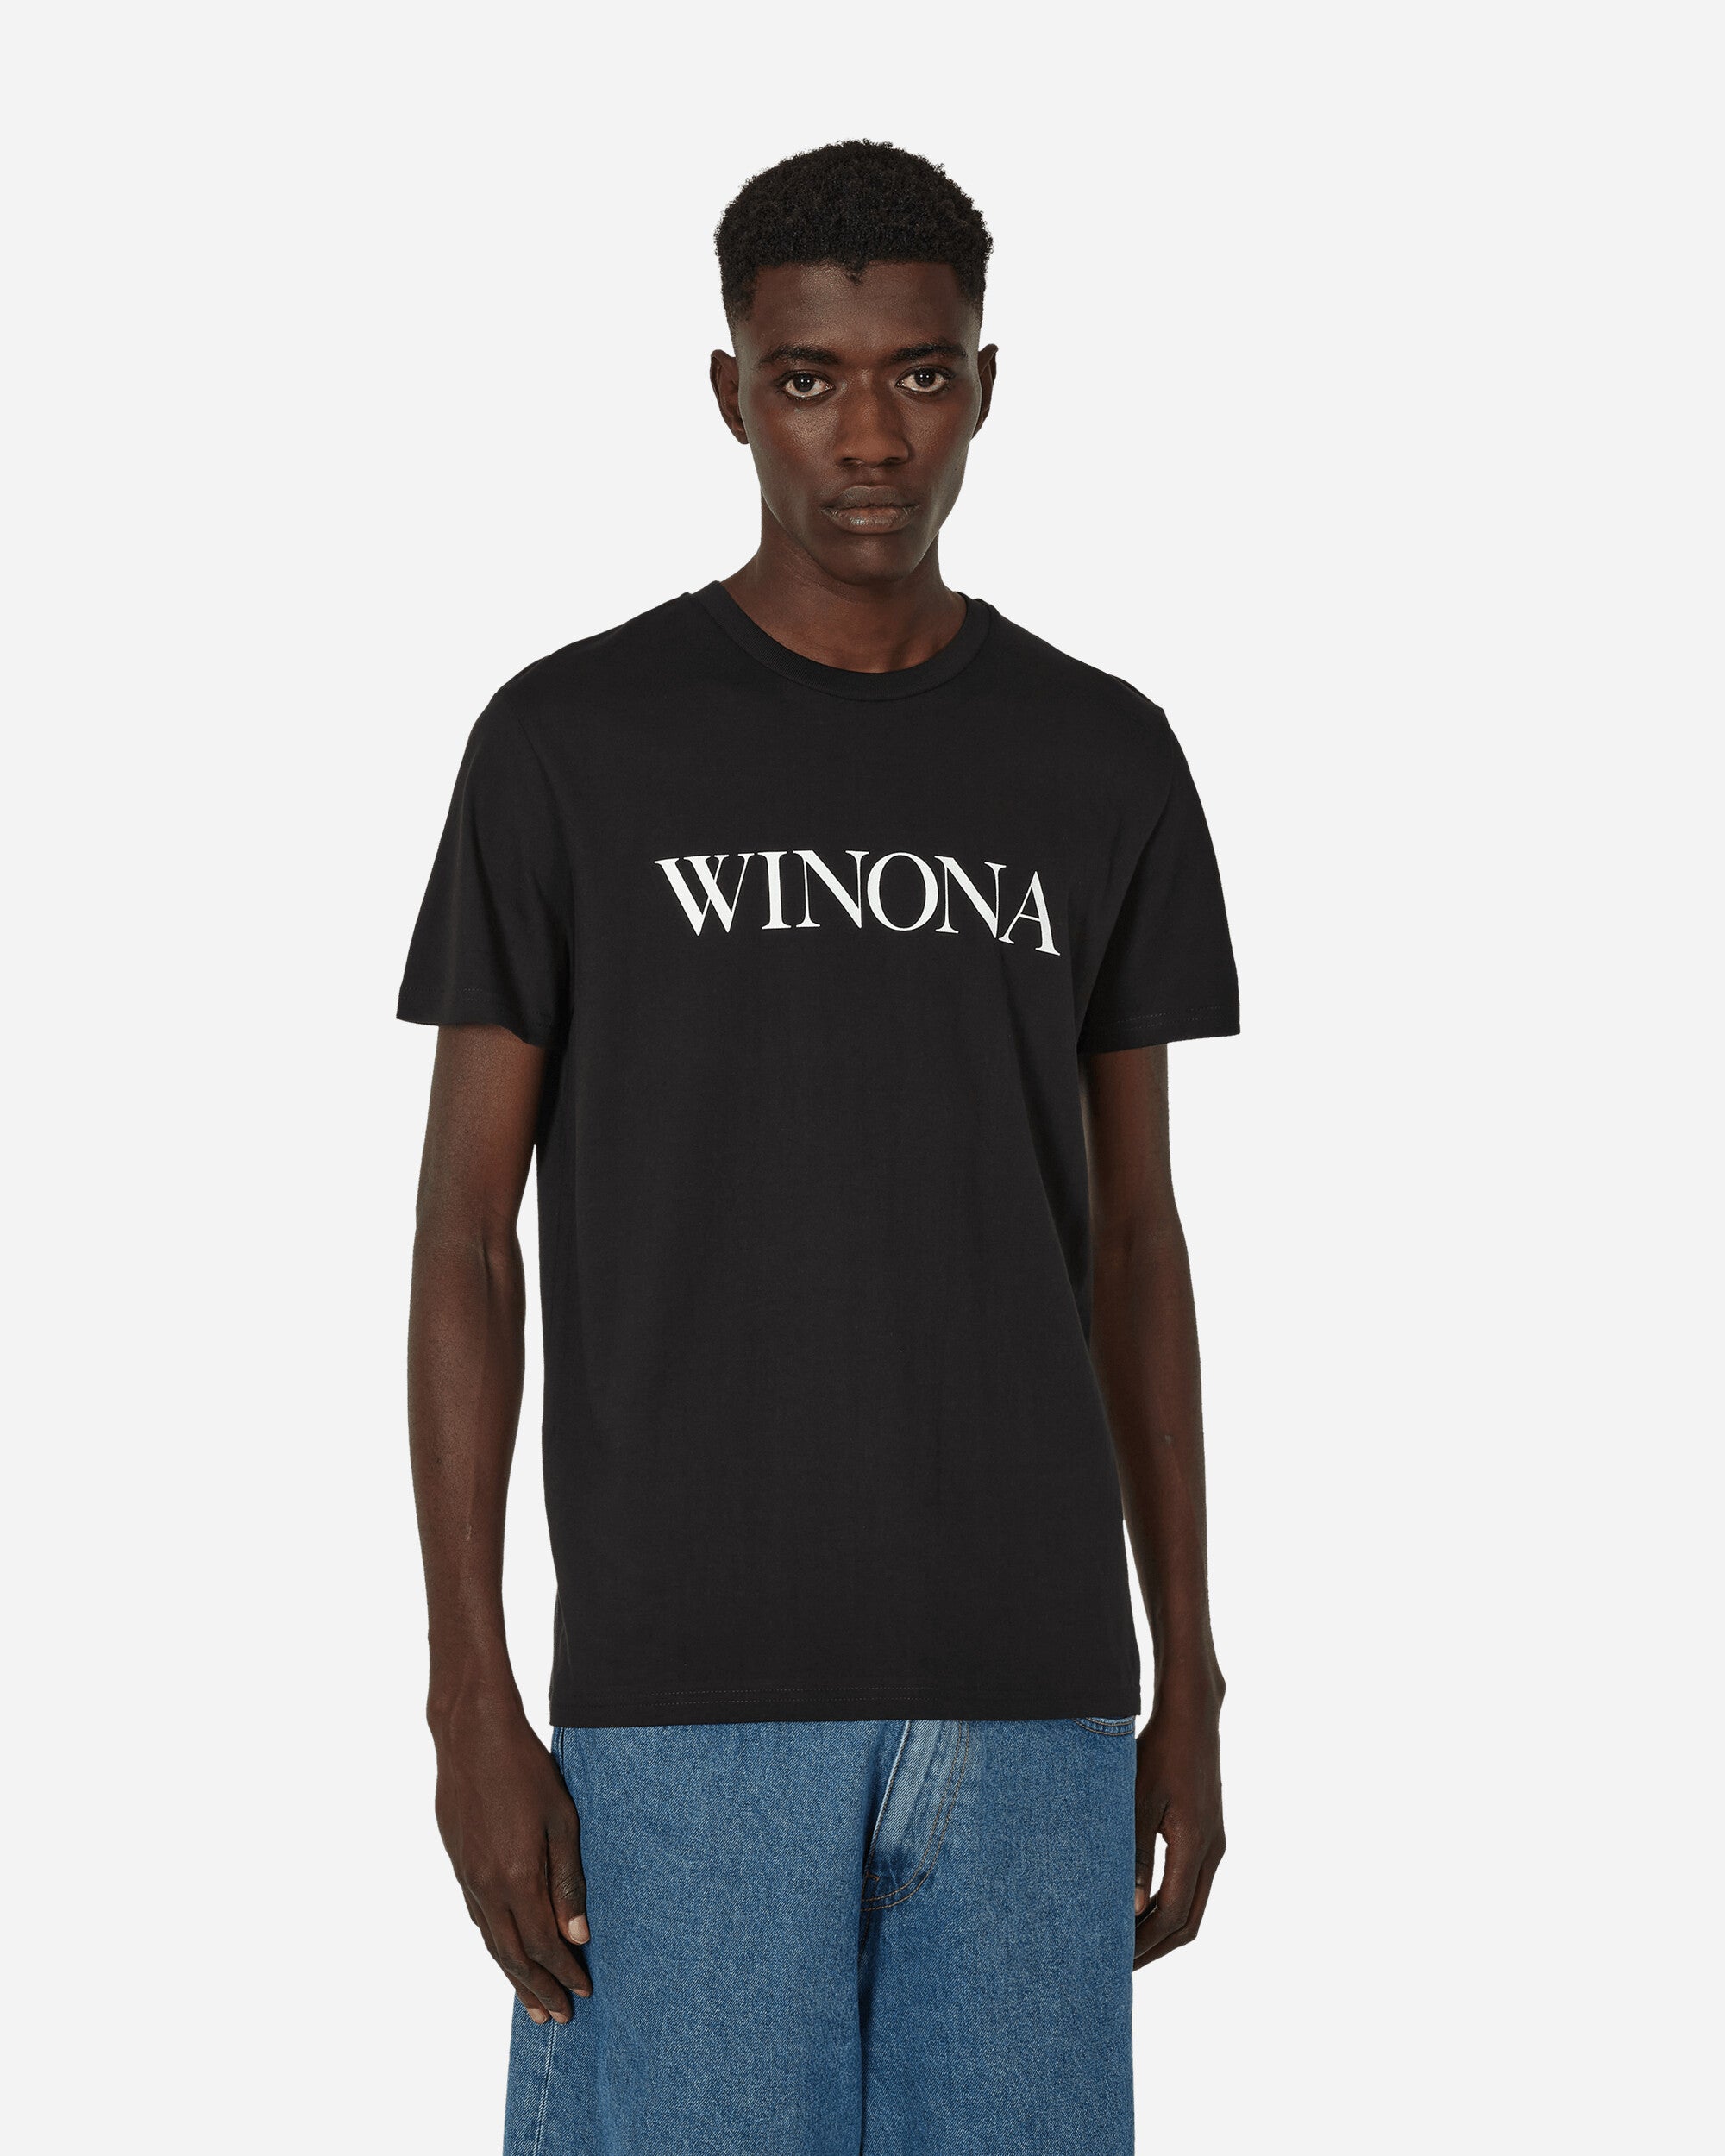 Winona T-Shirt Black